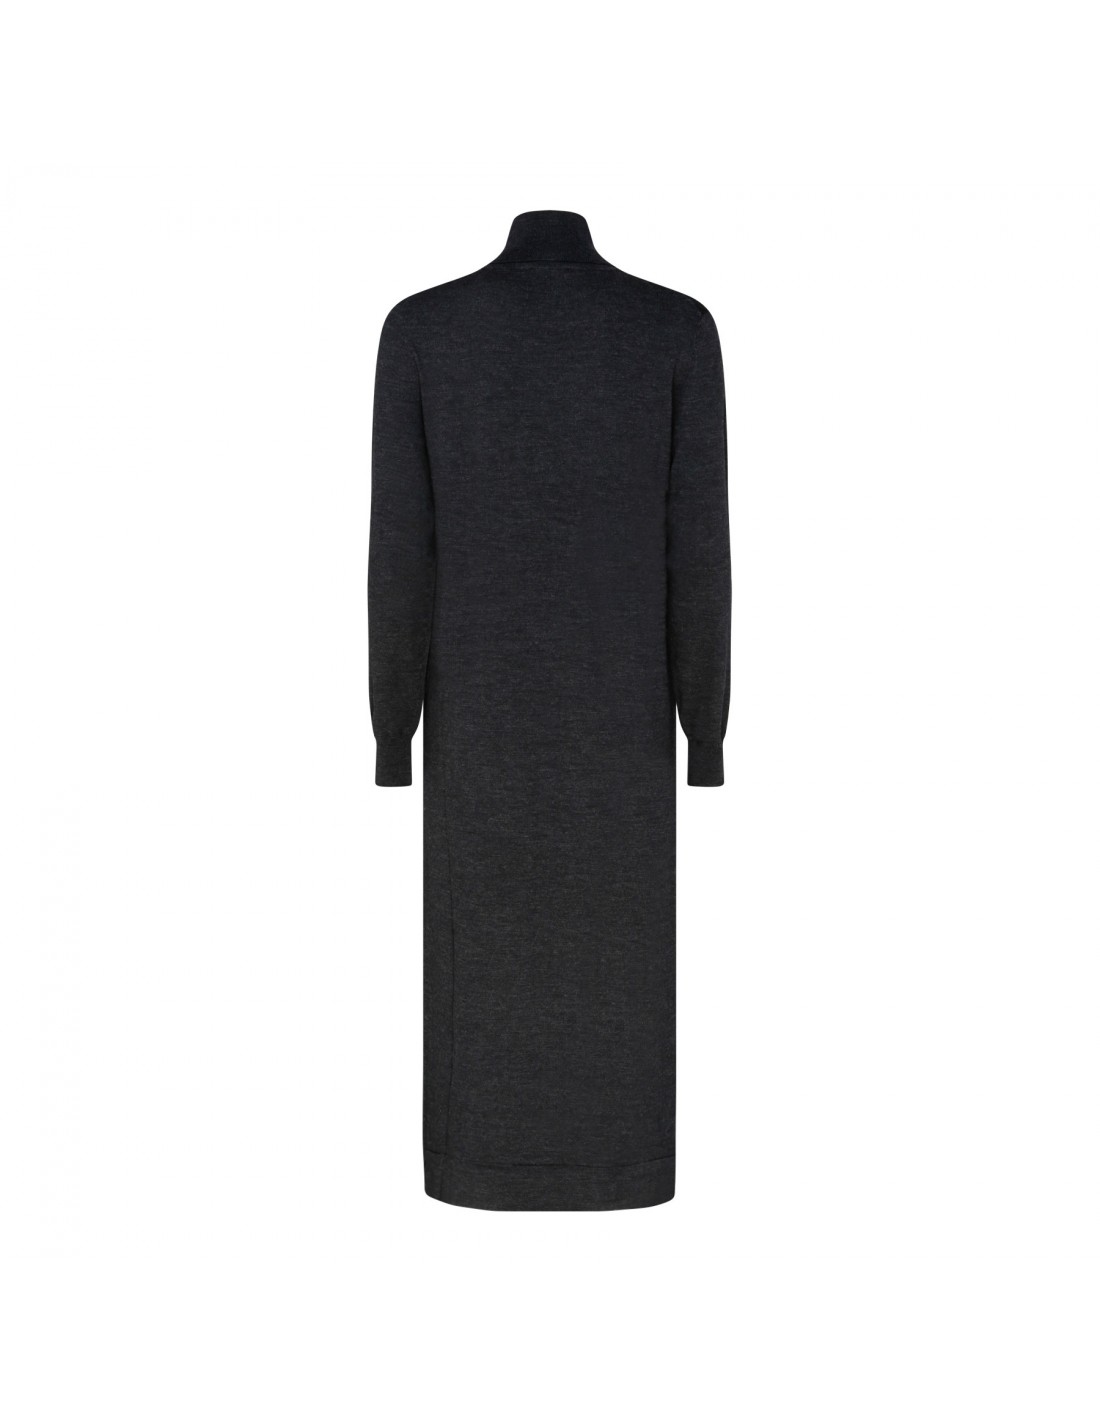 Dark gray knit wool blend dress